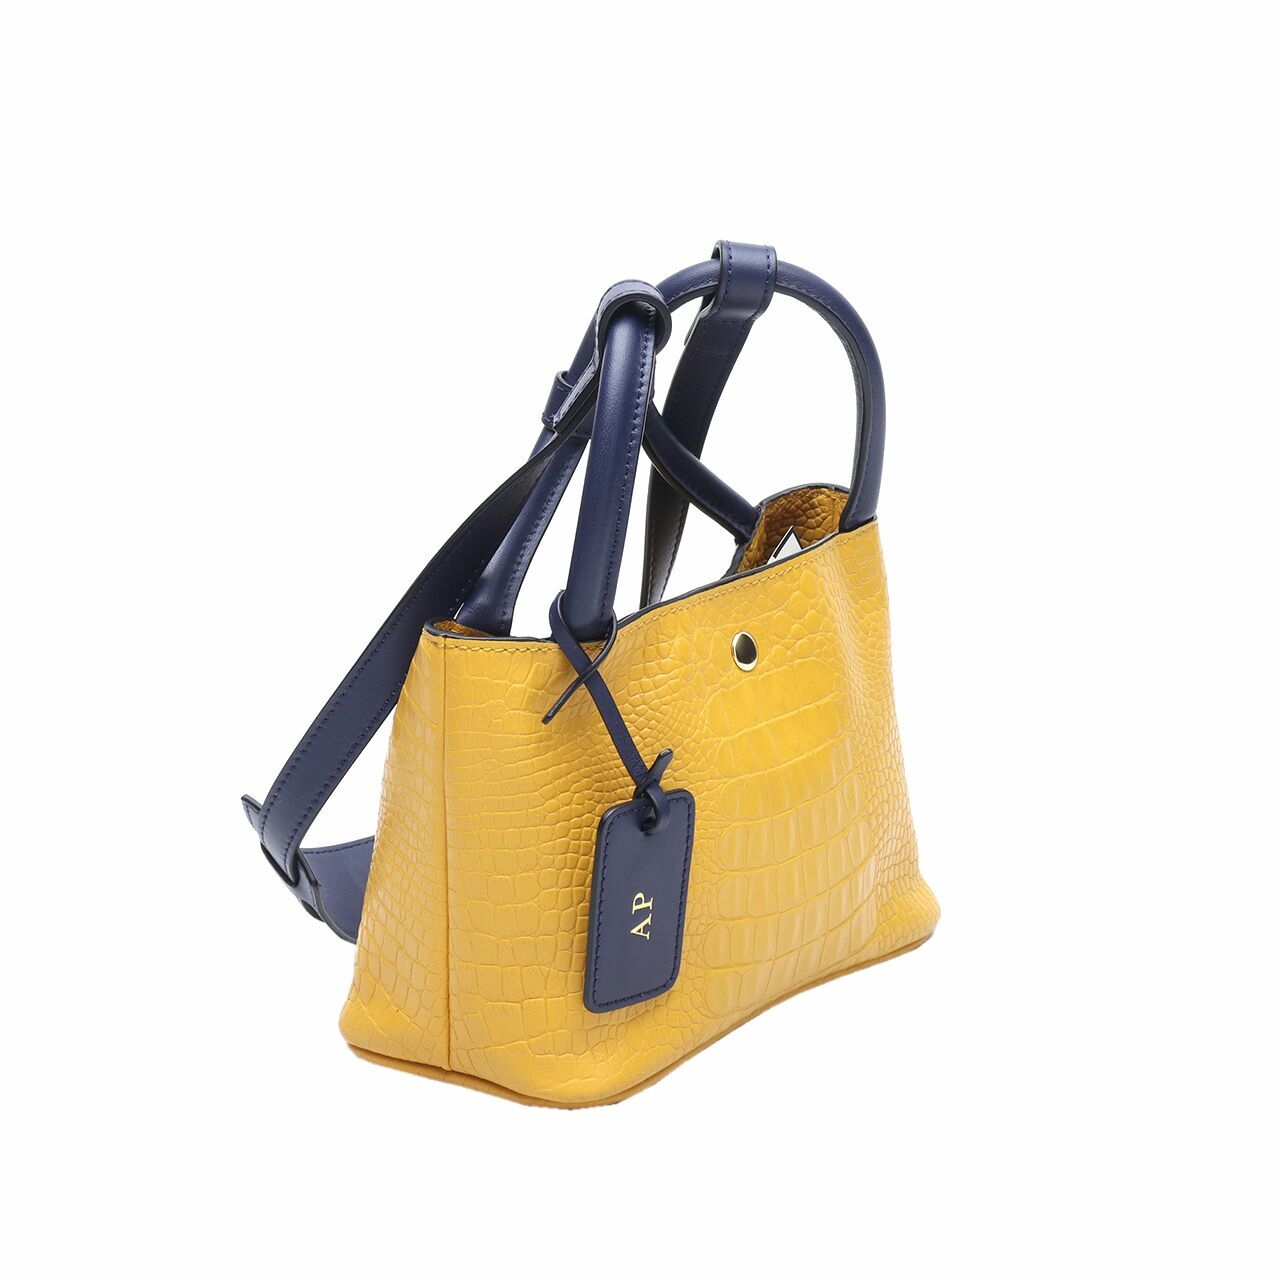 Rounn Yellow/Navy Bucket Satchel Bag